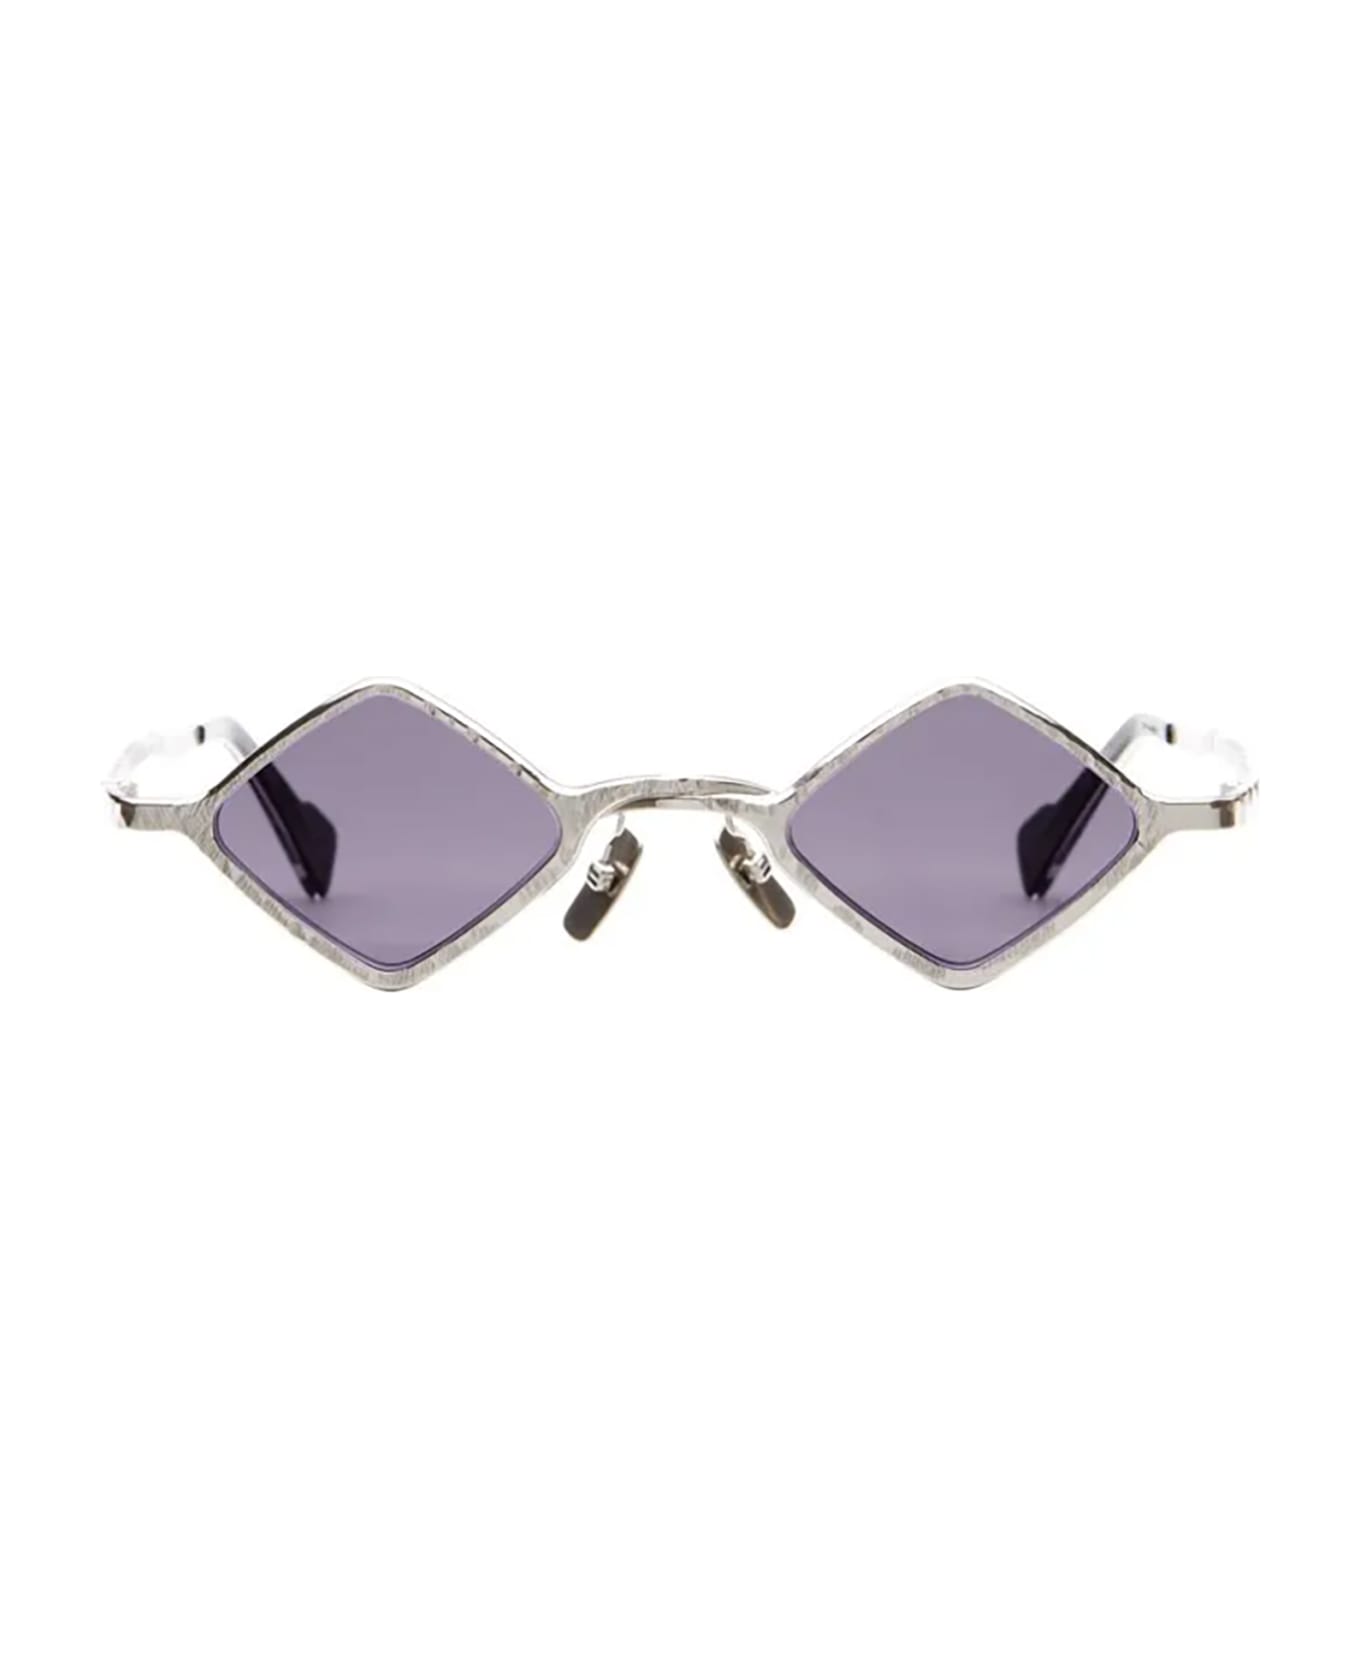 Kuboraum Z14 Sunglasses - Siv Violet サングラス